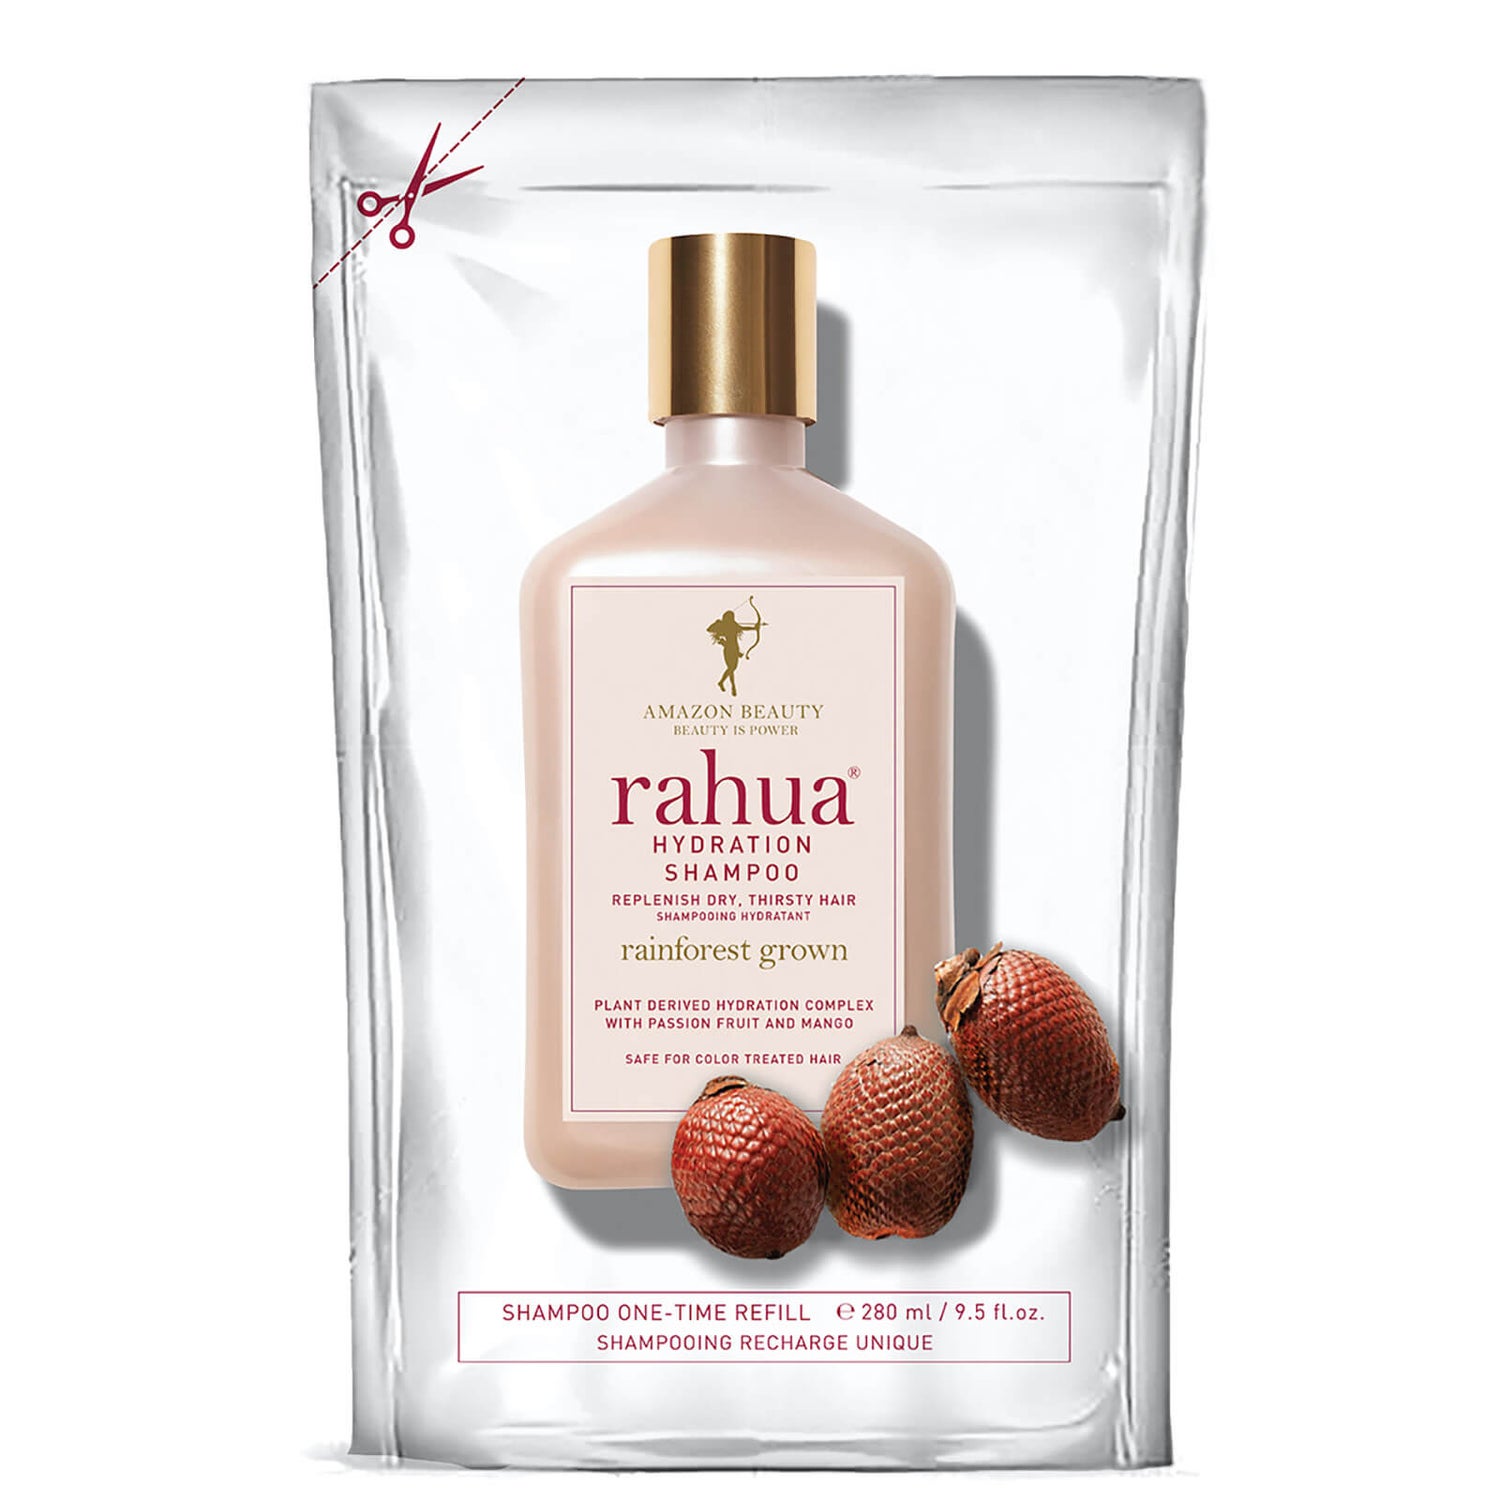 Rahua Hydration Shampoo Refill (9.5 fl. oz.)